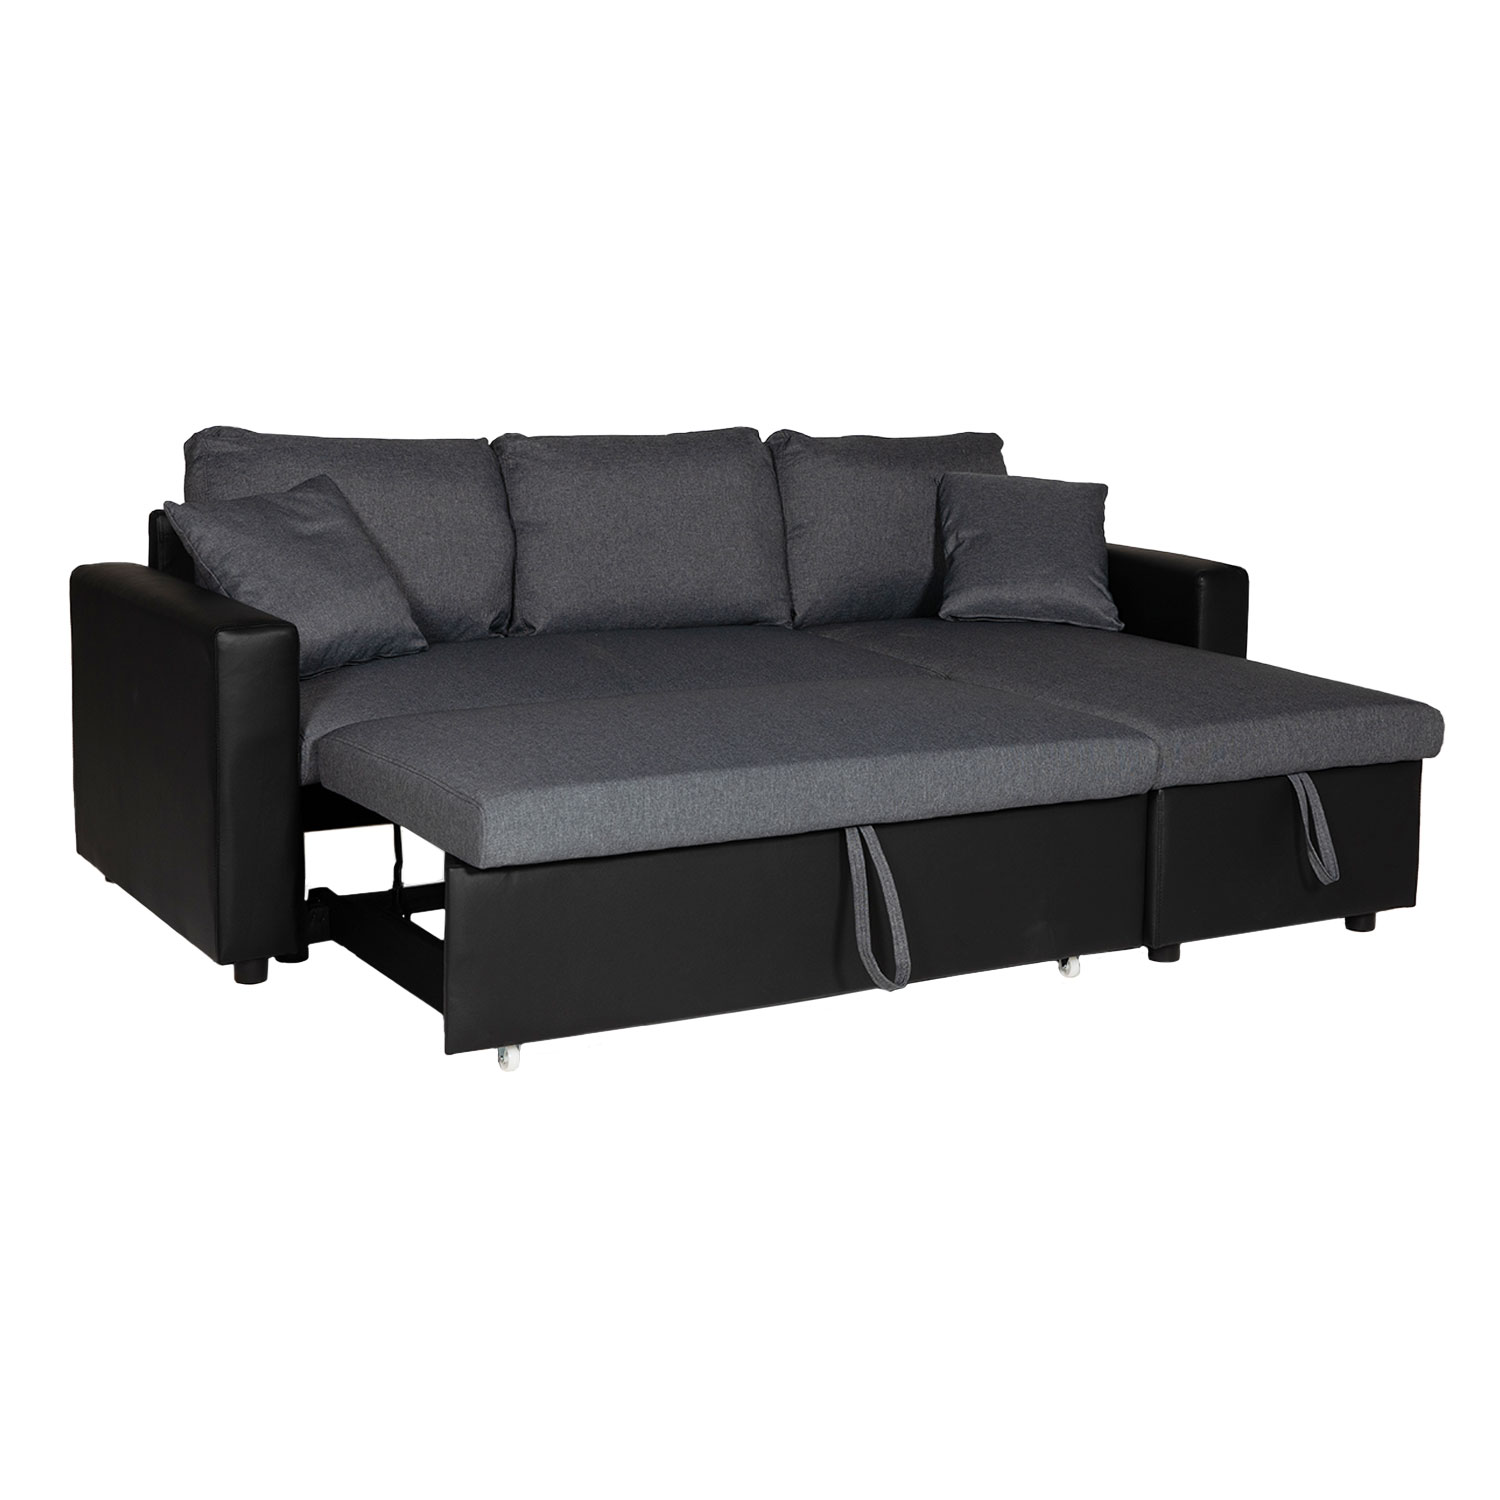 Sofá cama CLARK 3 plazas color gris chiné y color negro